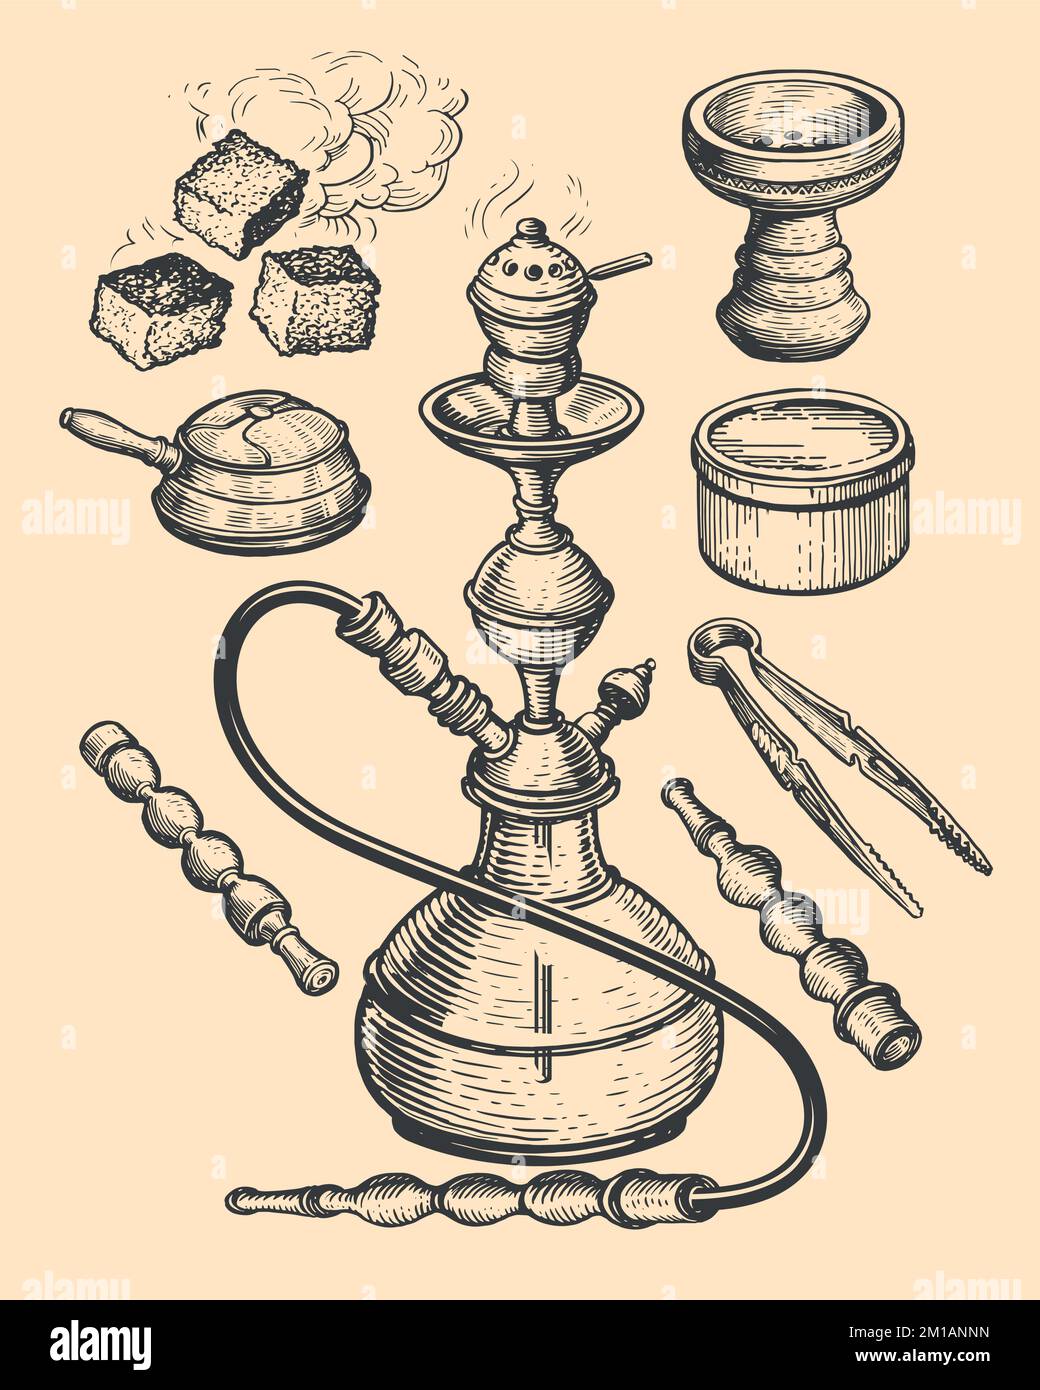 Hookah and accessories sketch. Shisha, tobacco, tongs, charcoal. Hand drawn vintage vector illustration Stock Vector